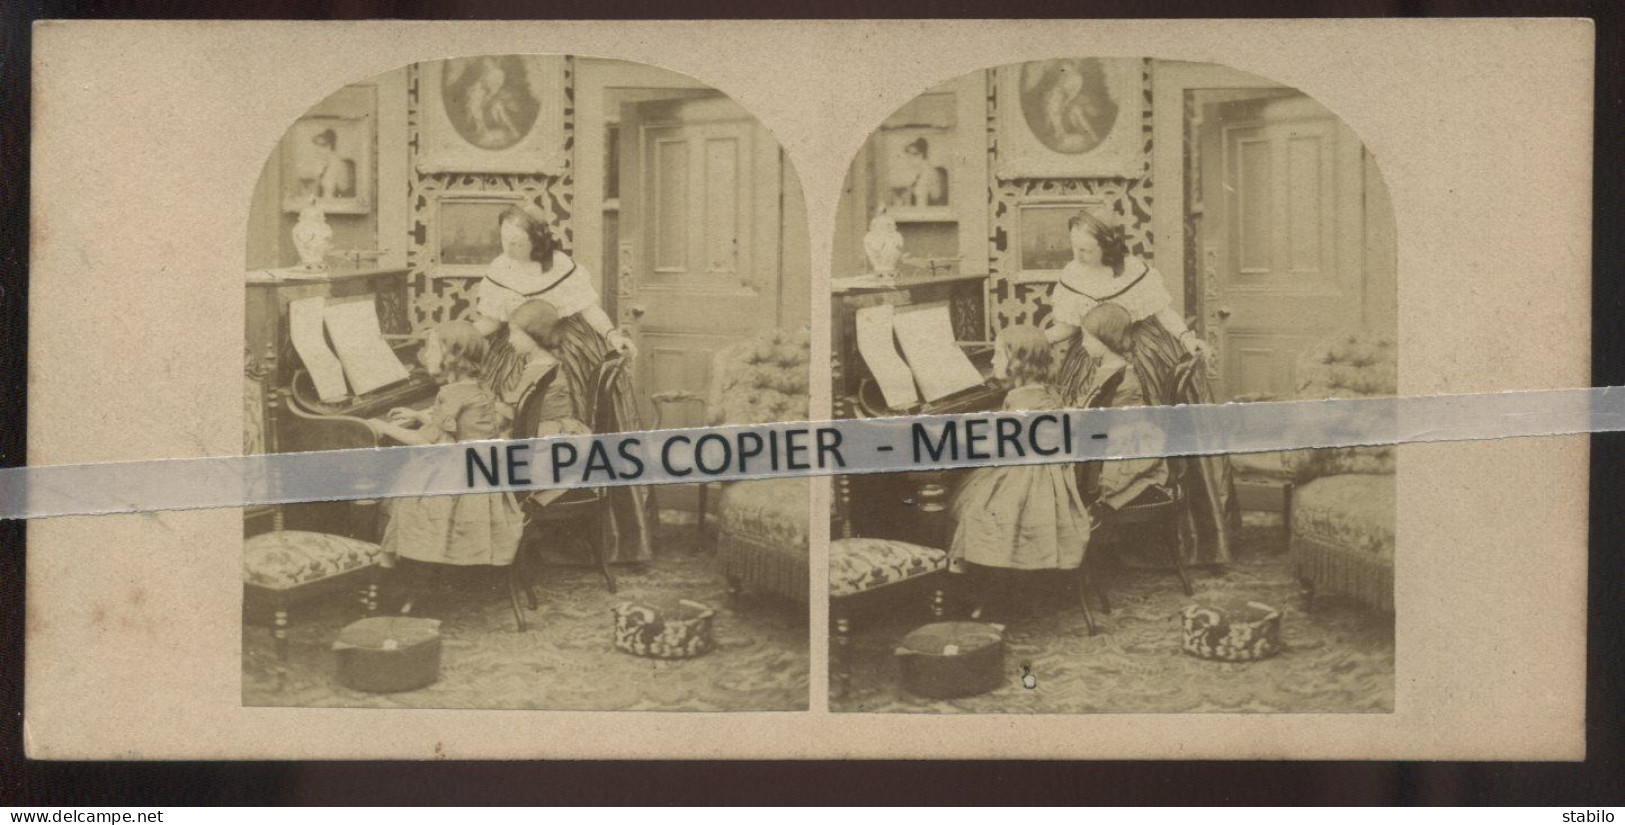 PHOTO STEREO - CABINET DE MUSIQUE EN 1860 - FILLETTE AU PIANO - Stereoscopic